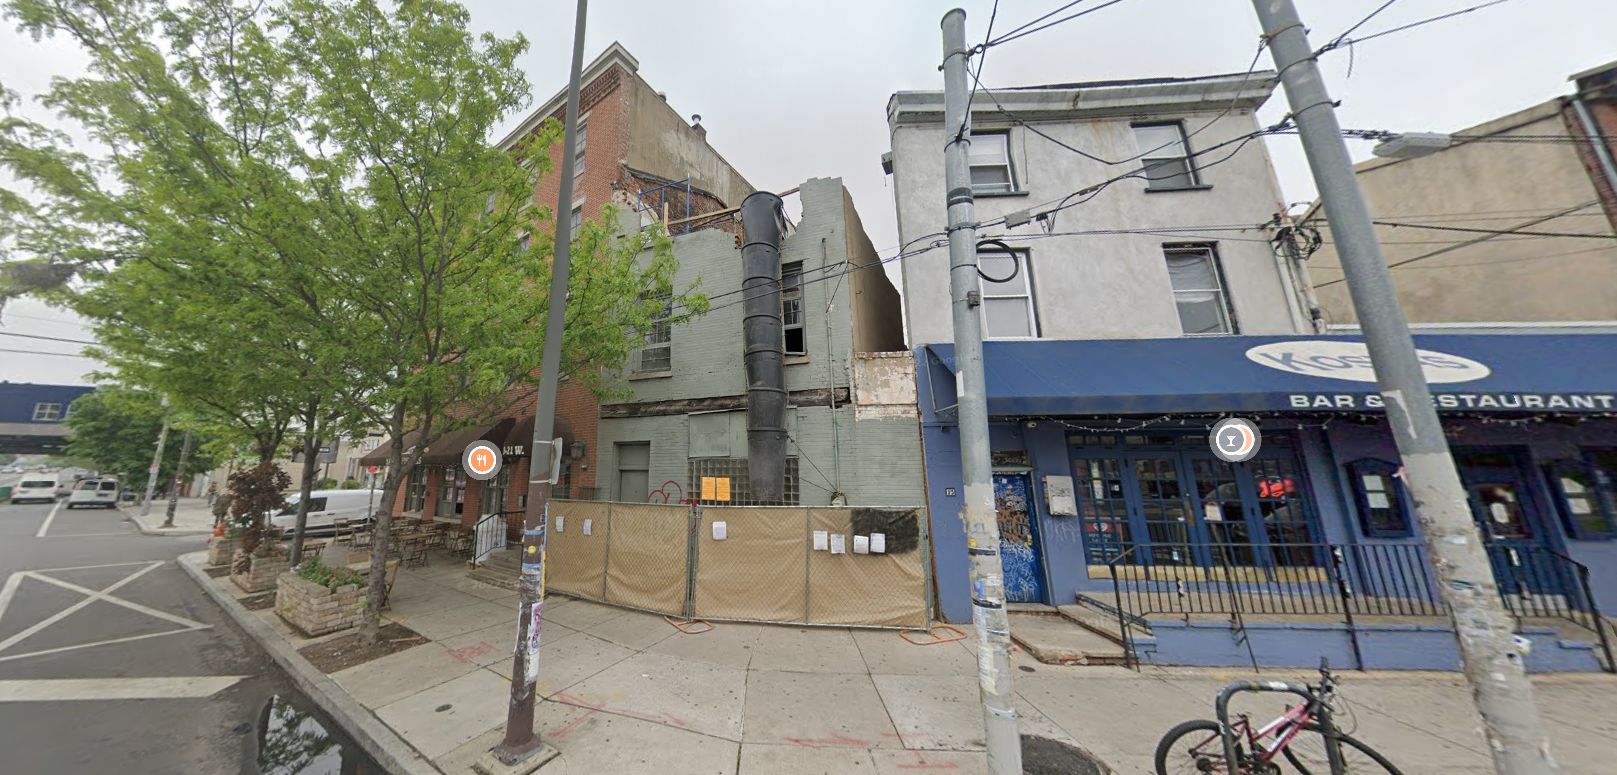 17 West Girard Street under demolition. Looking north. May 2022. Credit: Google Maps